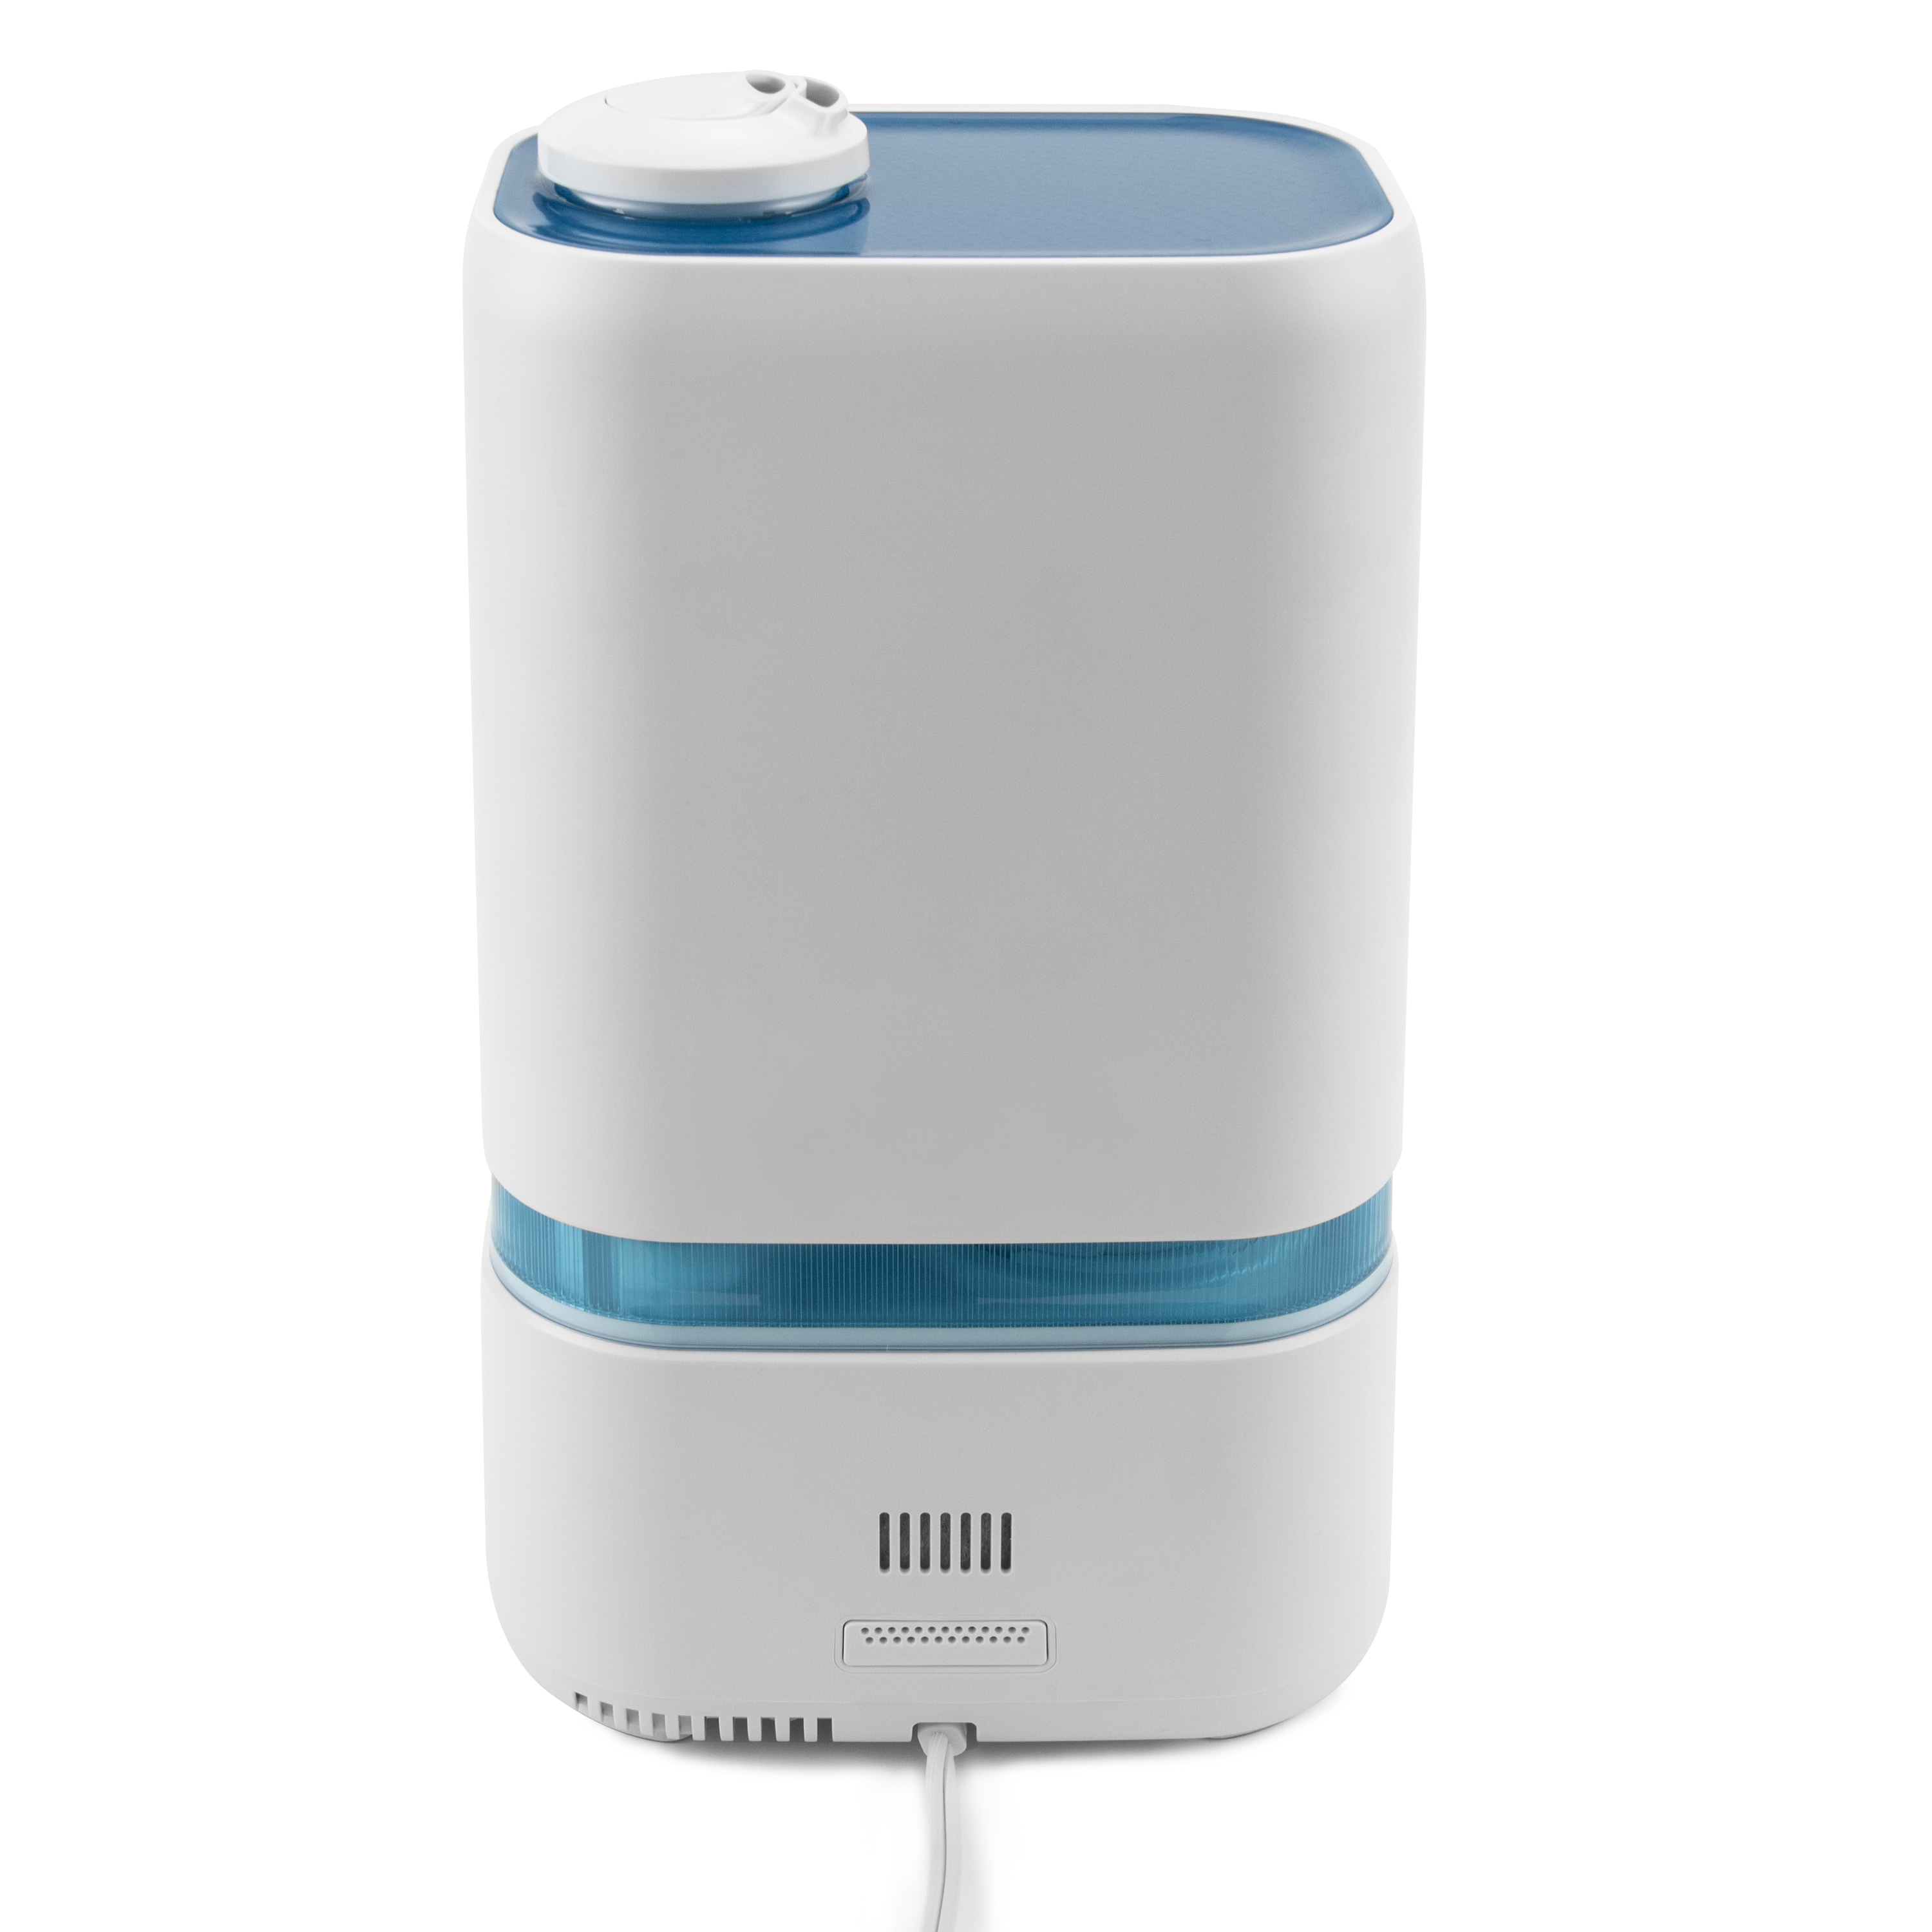 Smart air humidifier: Levoit Dual 200S #levoit #humidifier @Levoit 